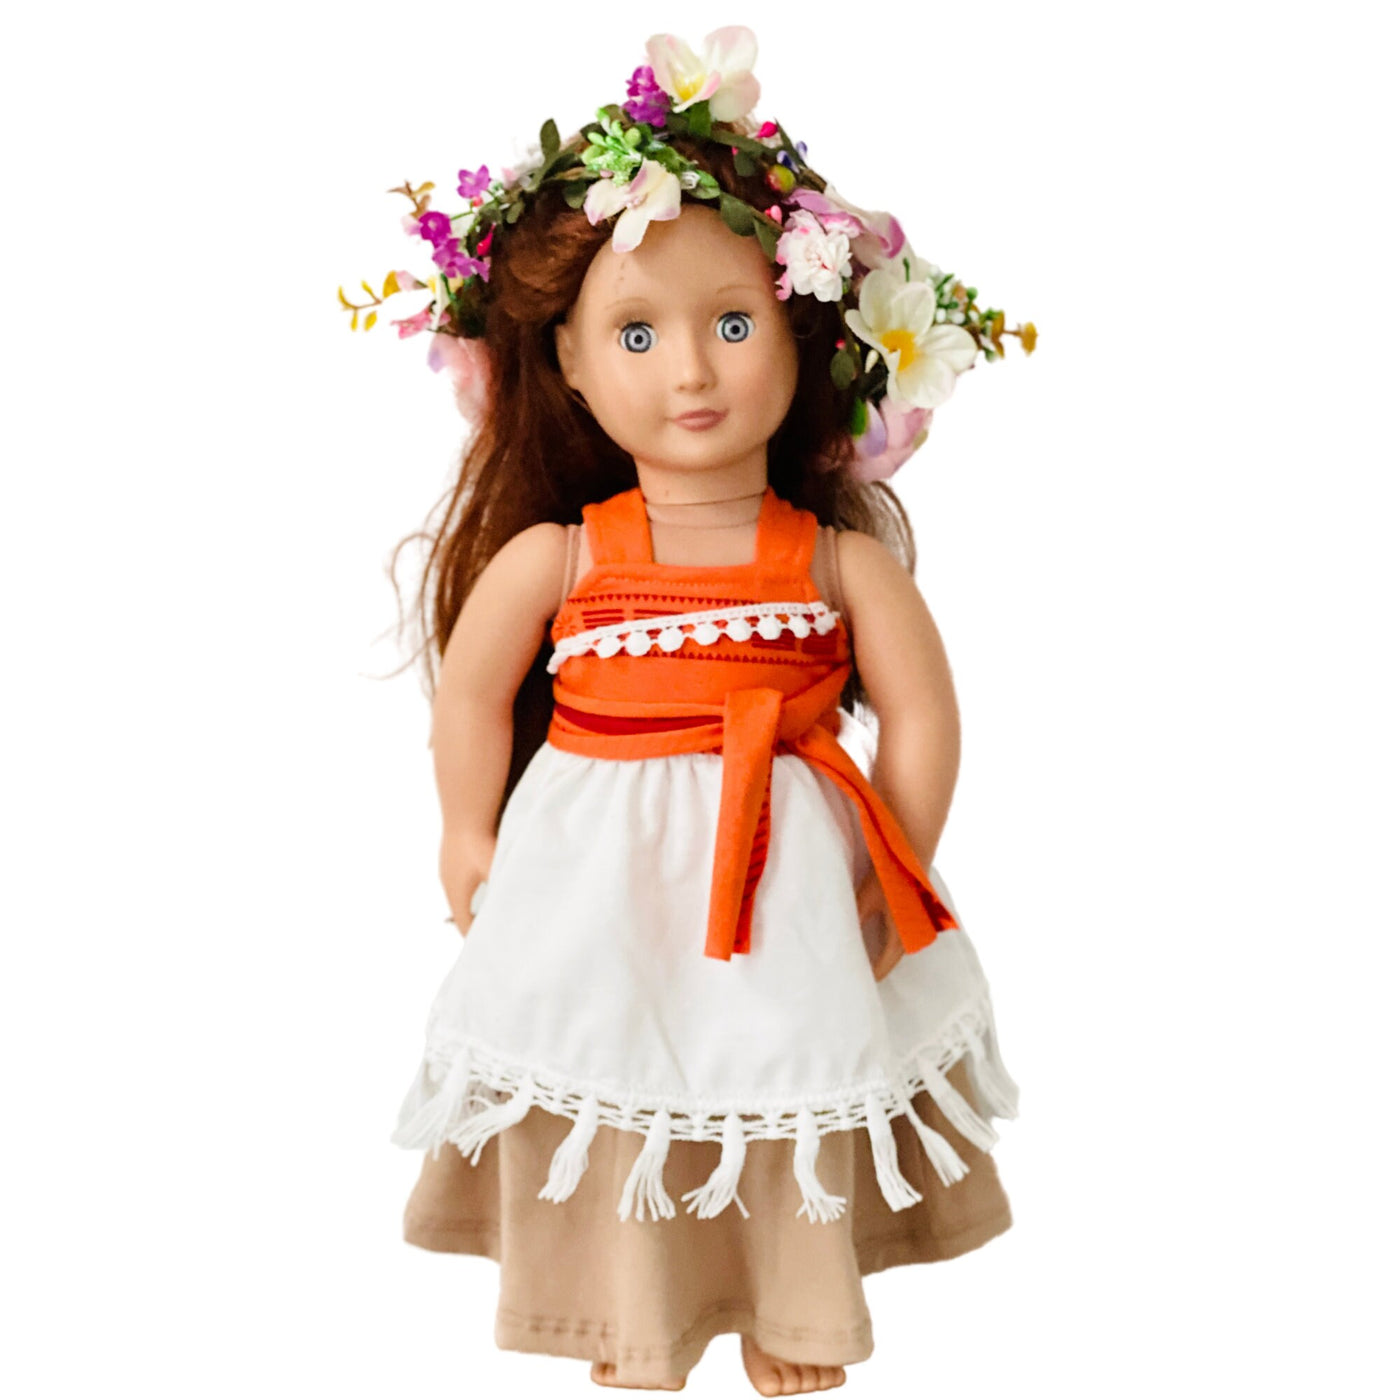 Island princess doll dress